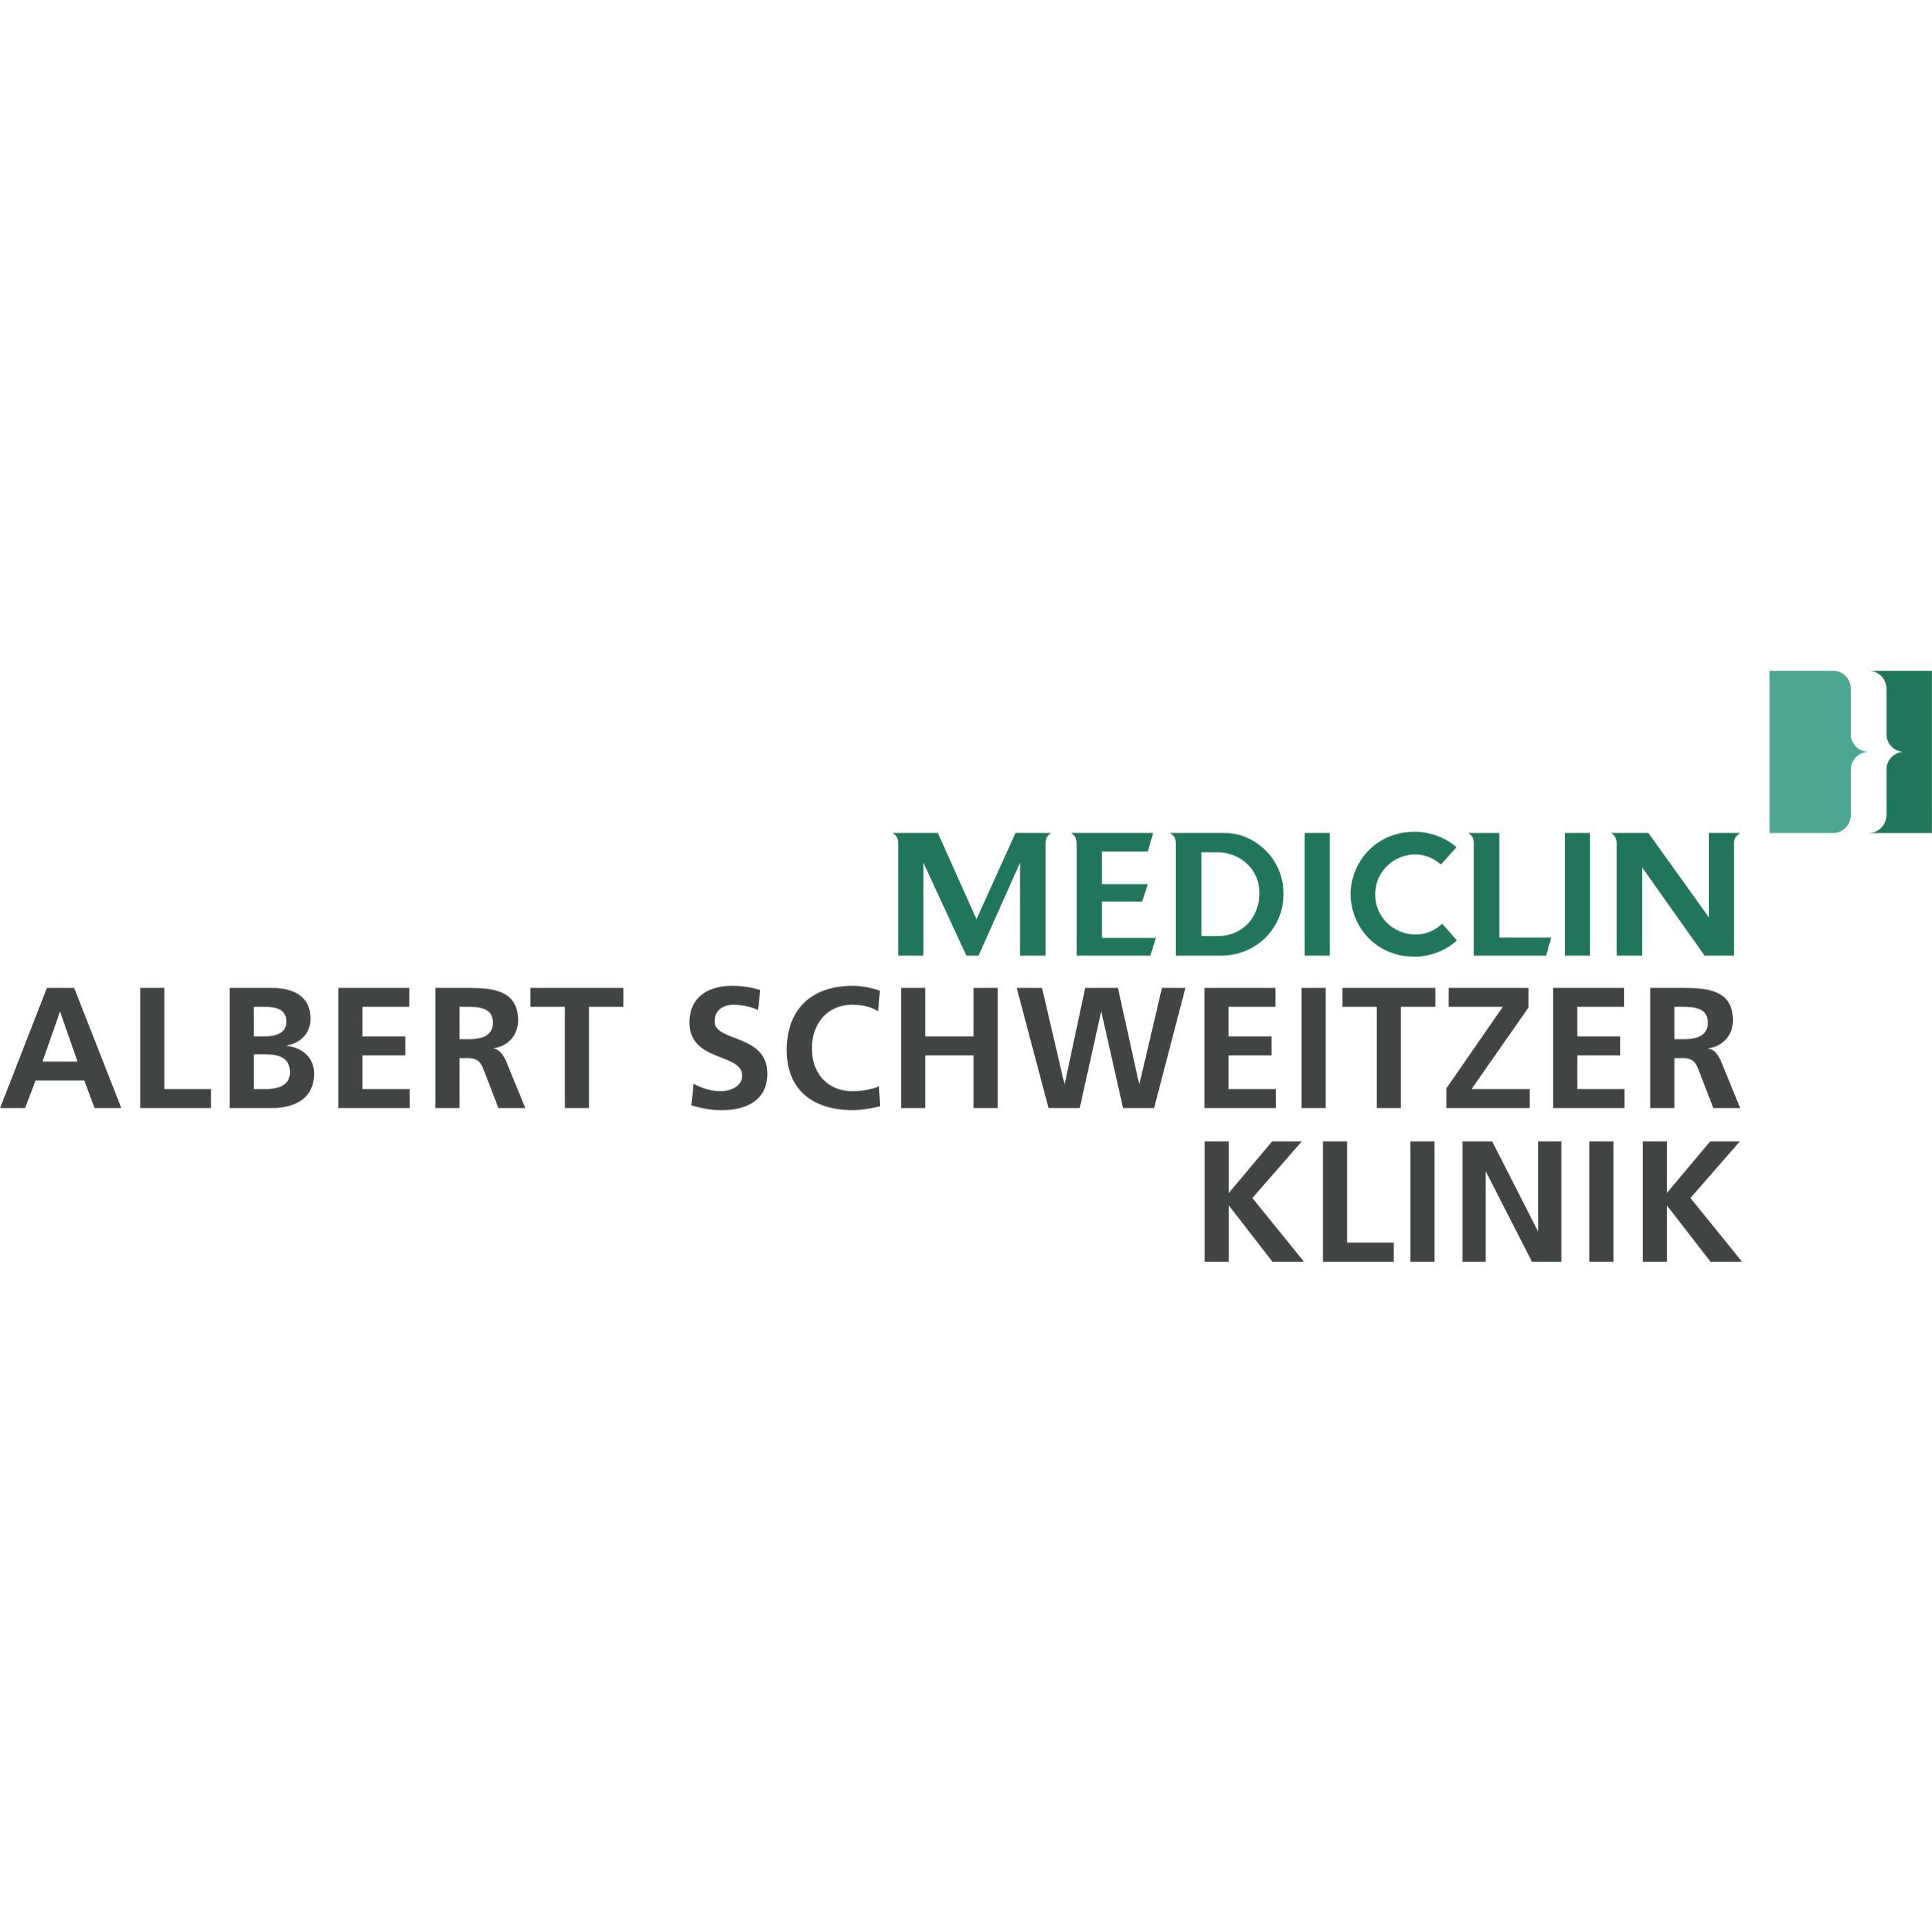 MEDICLIN Albert Schweitzer Klinik Logo